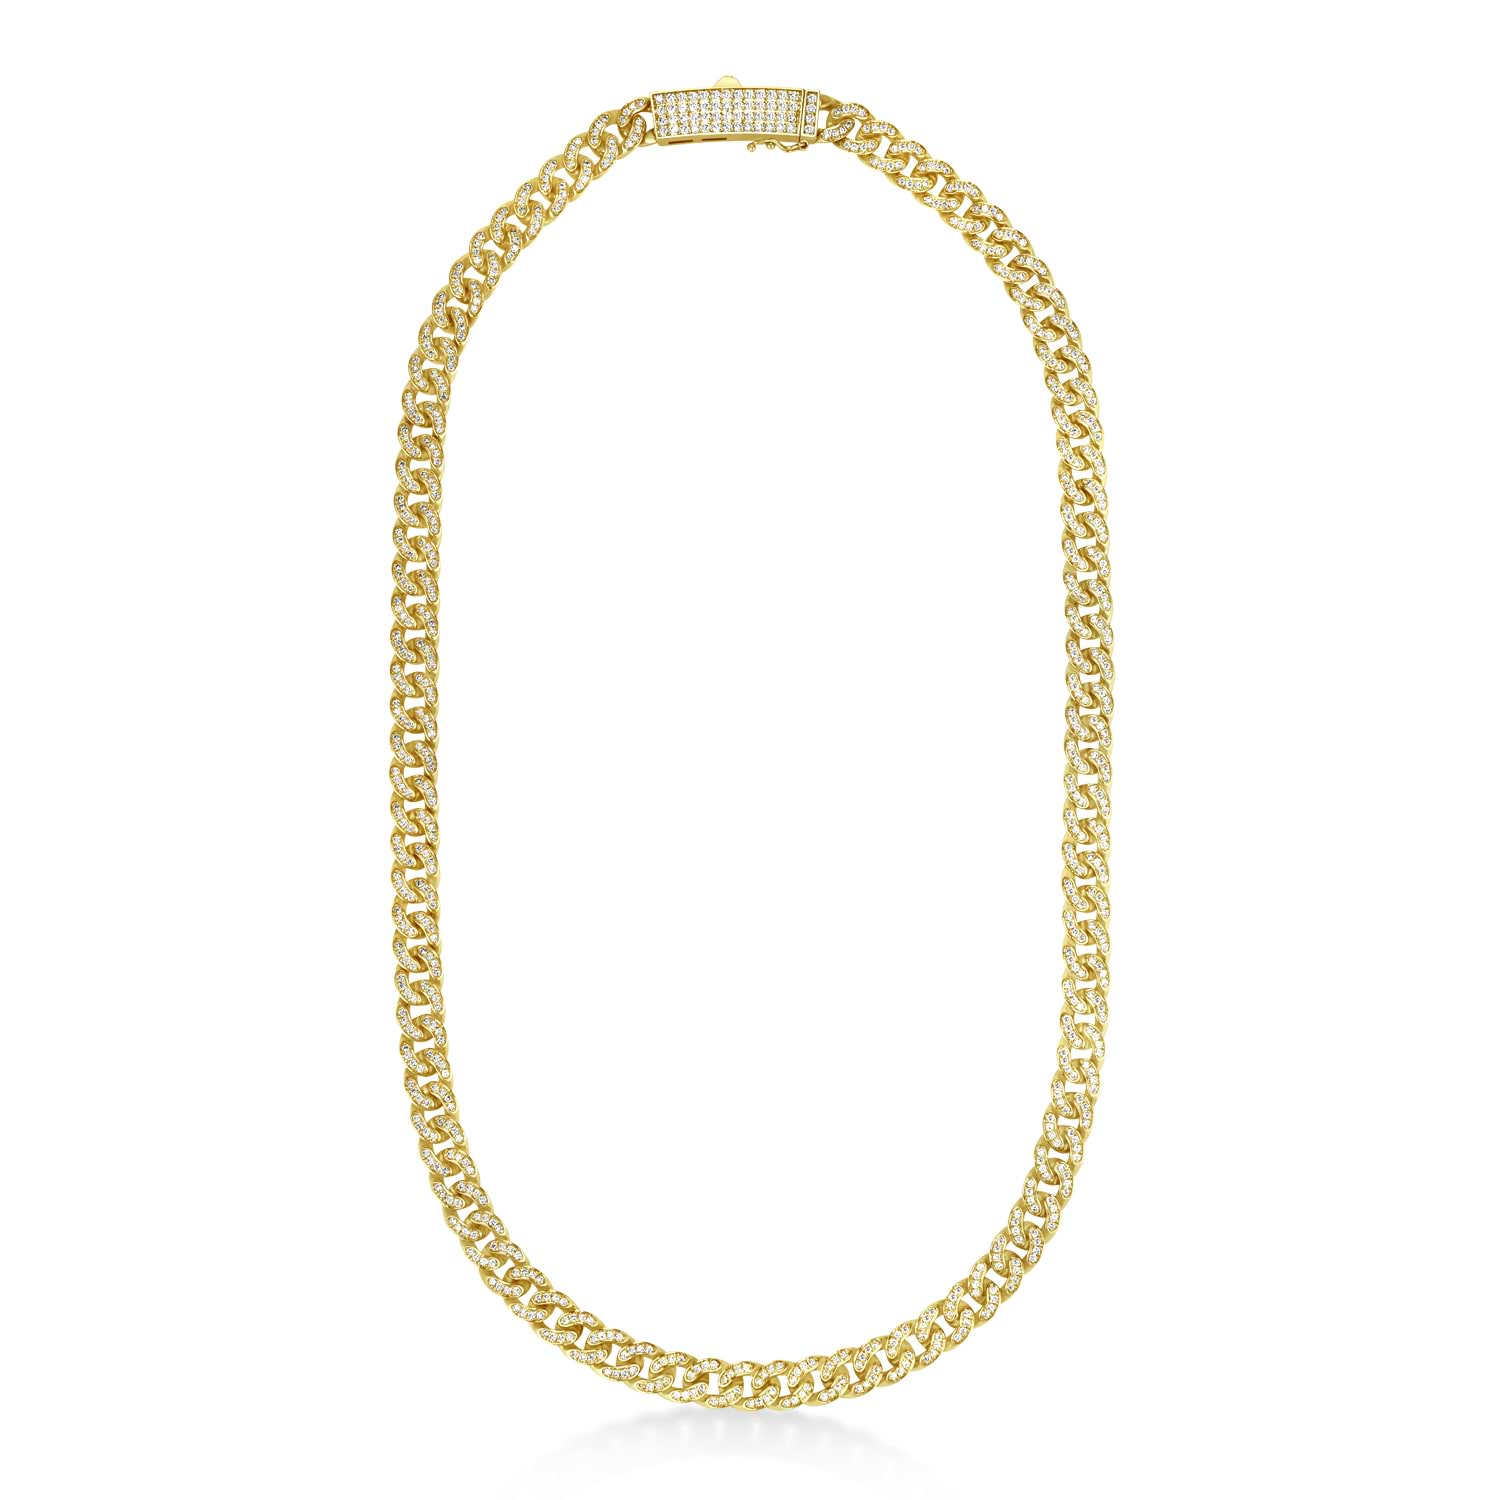 Diamond Miami Cuban Chain Necklace 14k Yellow Gold (6.26ct)